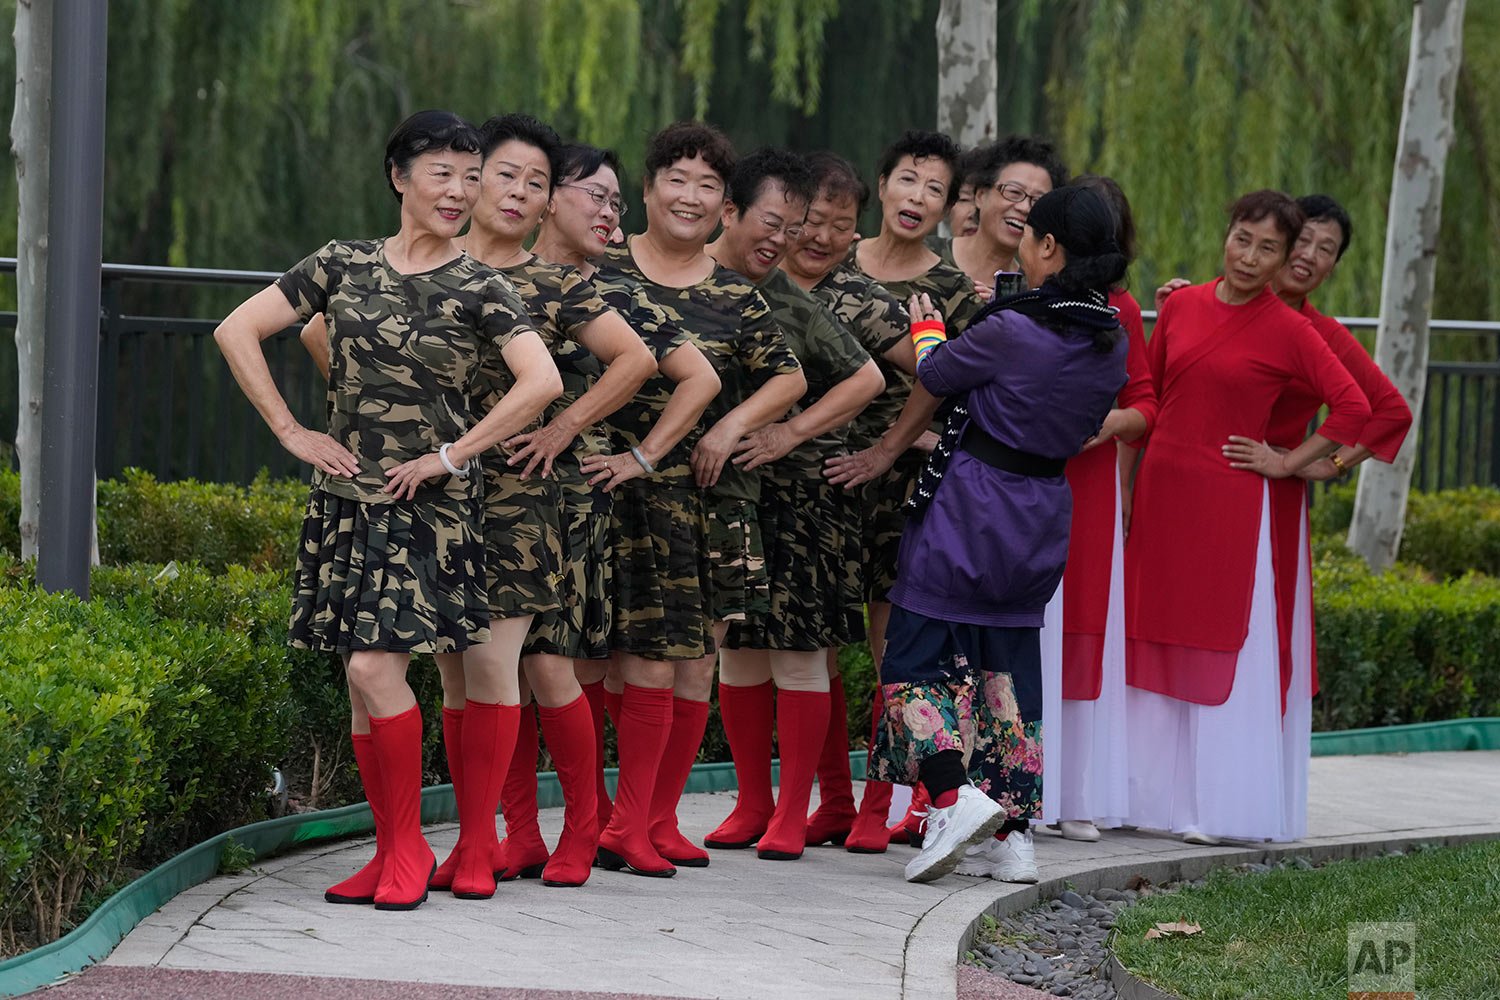  Dancers pose for photos at a park in Beijing, China, Thursday, Oct. 14, 2021. (AP Photo/Ng Han Guan) 